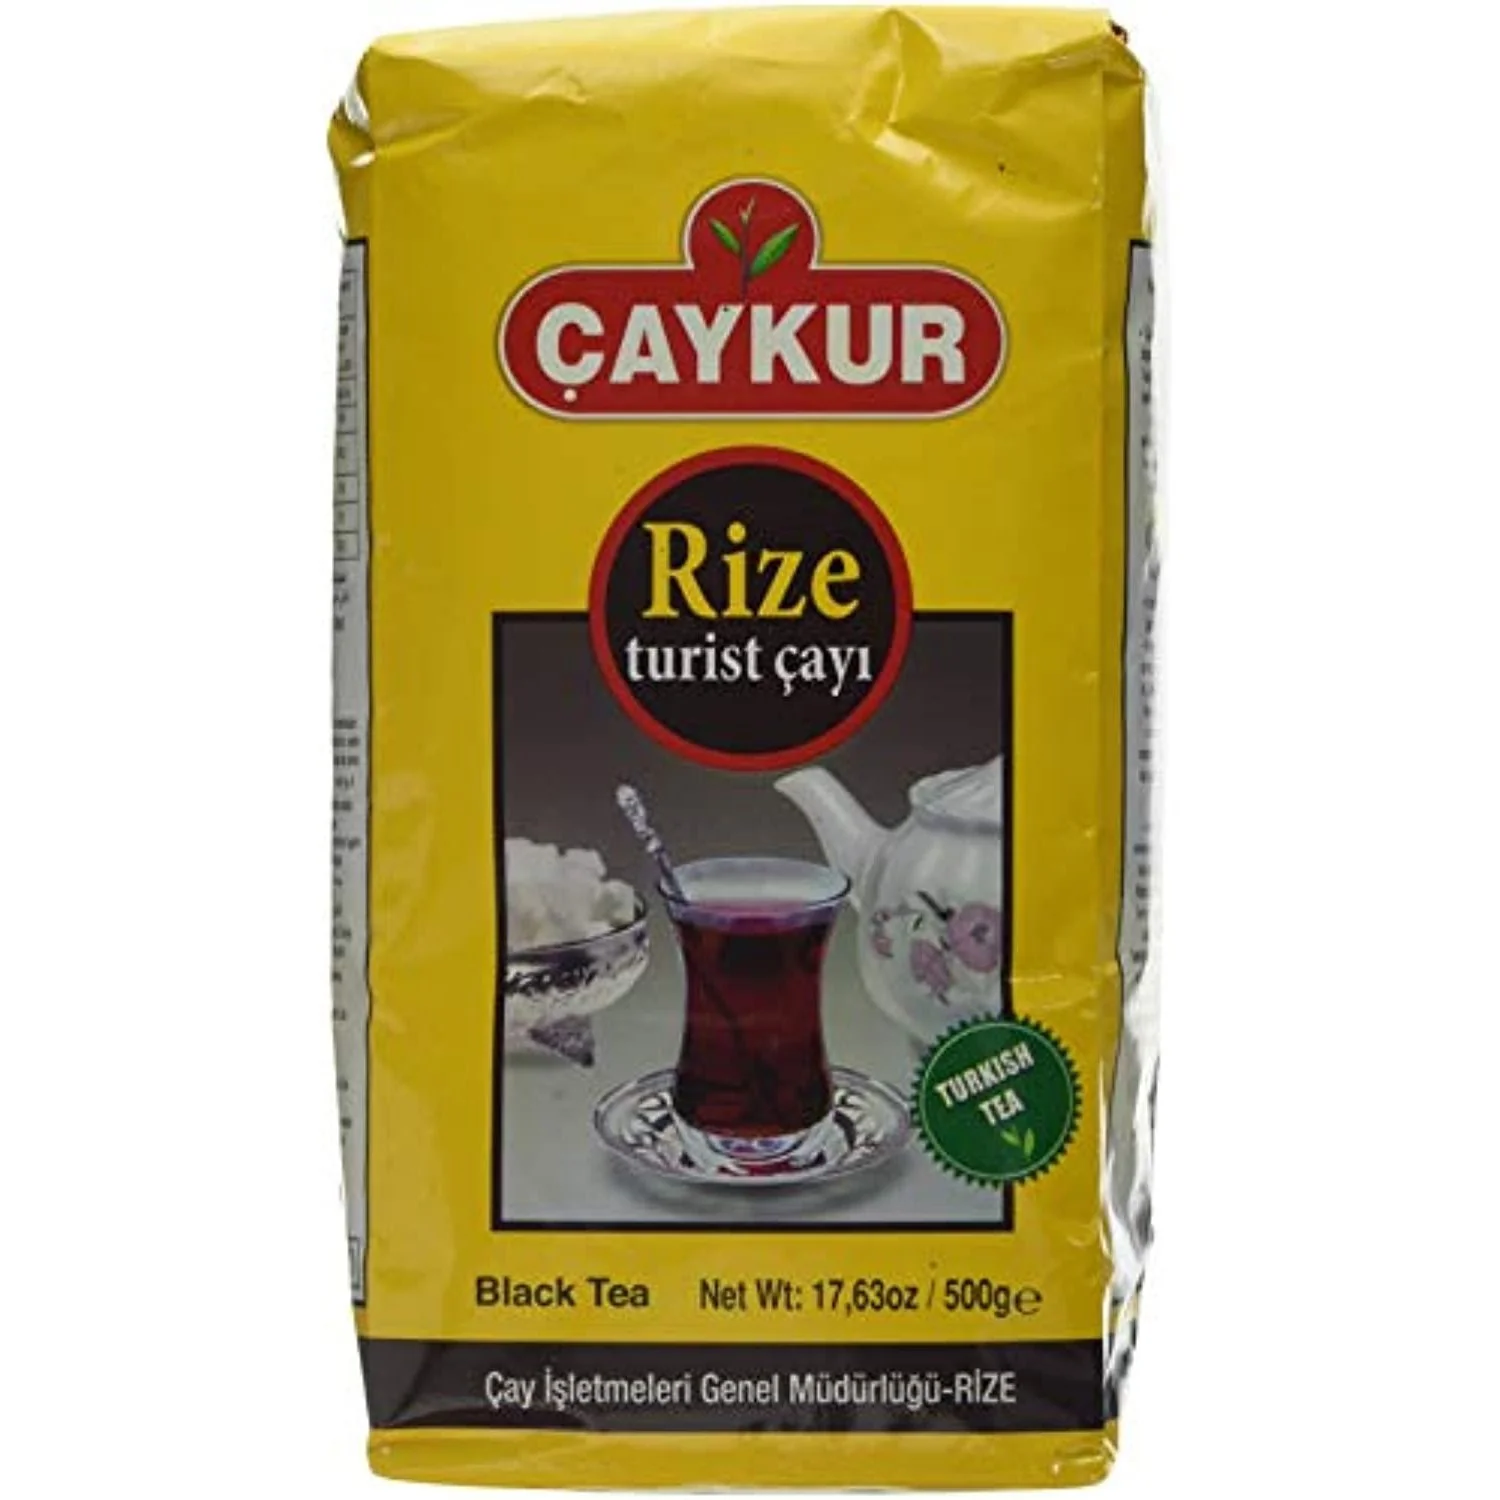 Caykur Rize Turkish Black Tea from Turkey (500g)